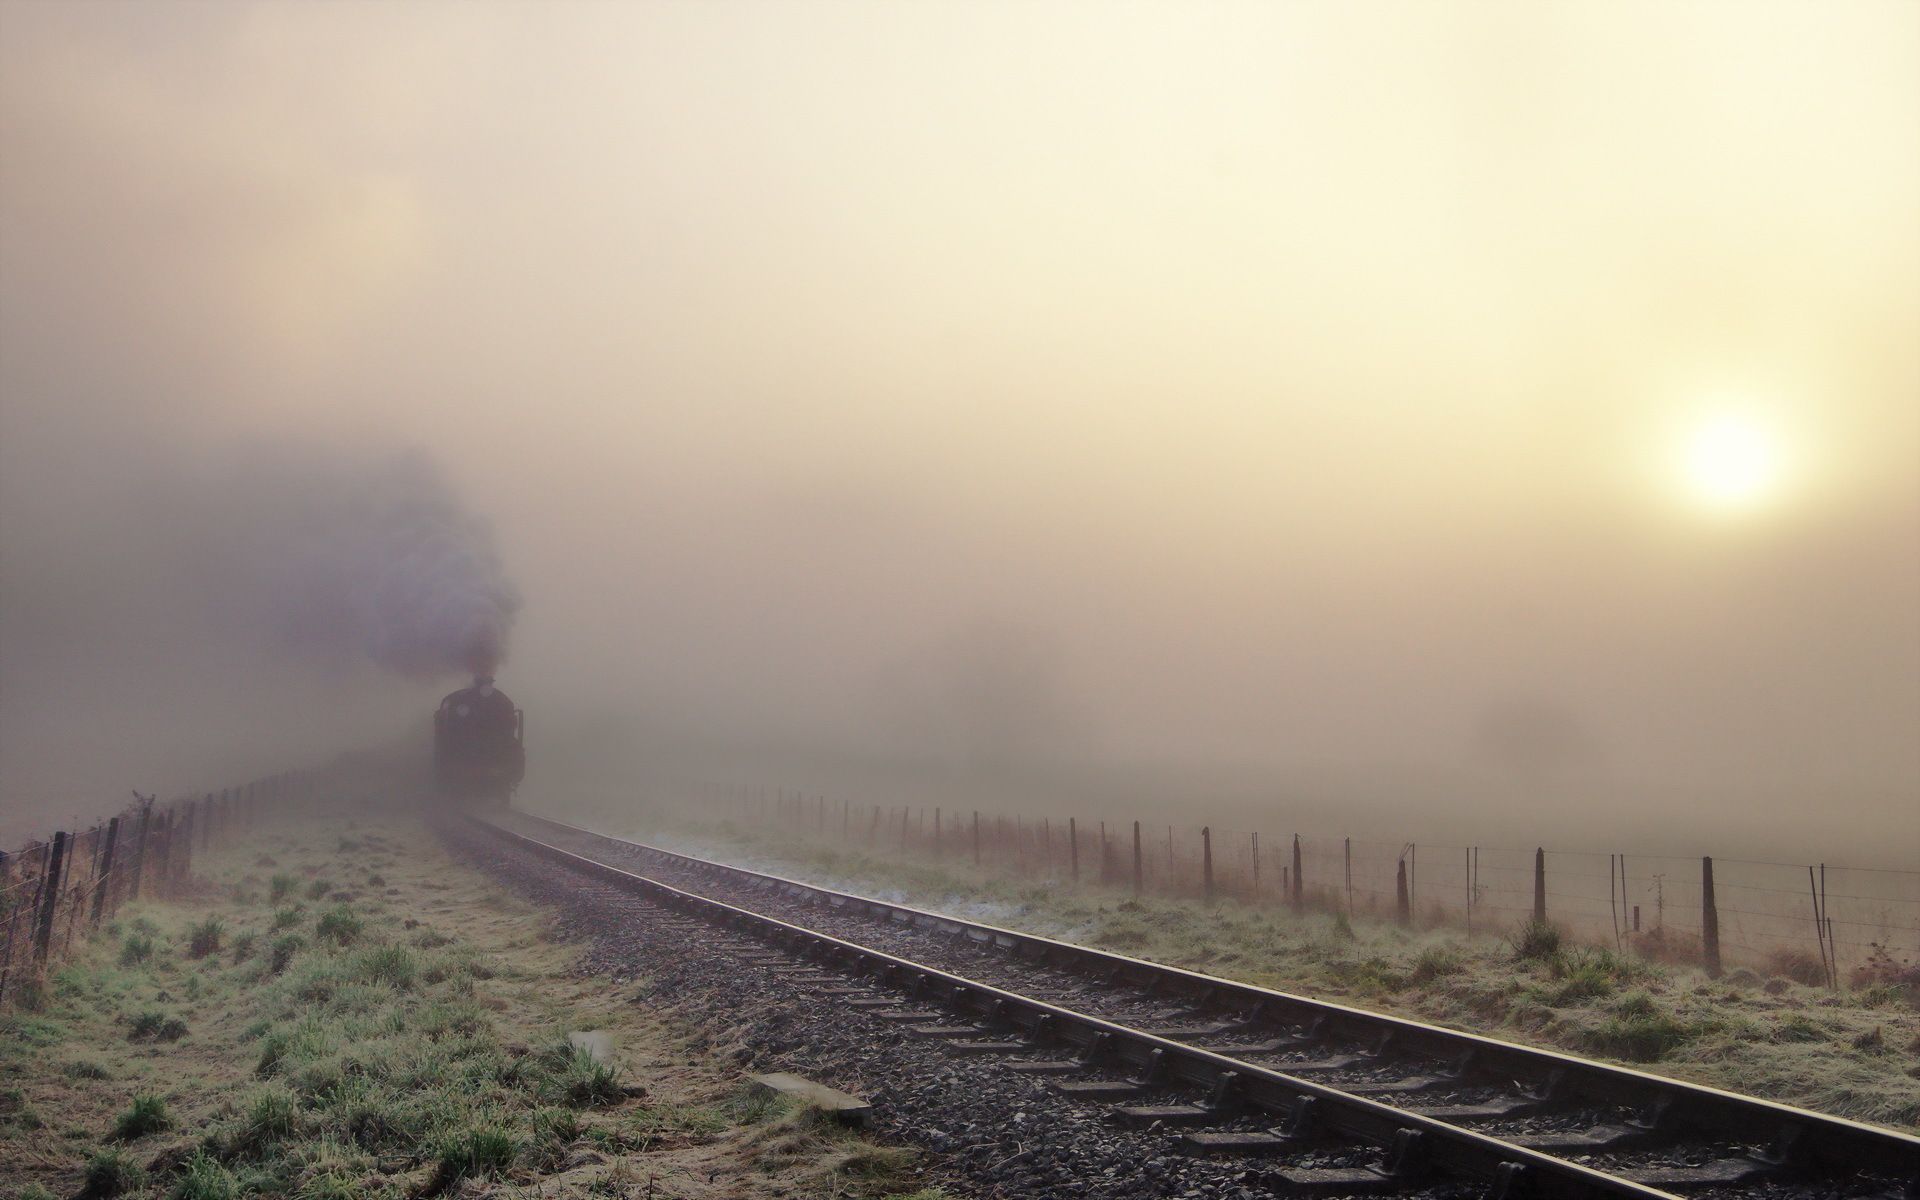 desktop Images vehicles, train, fog, locomotive, railroad, steam train